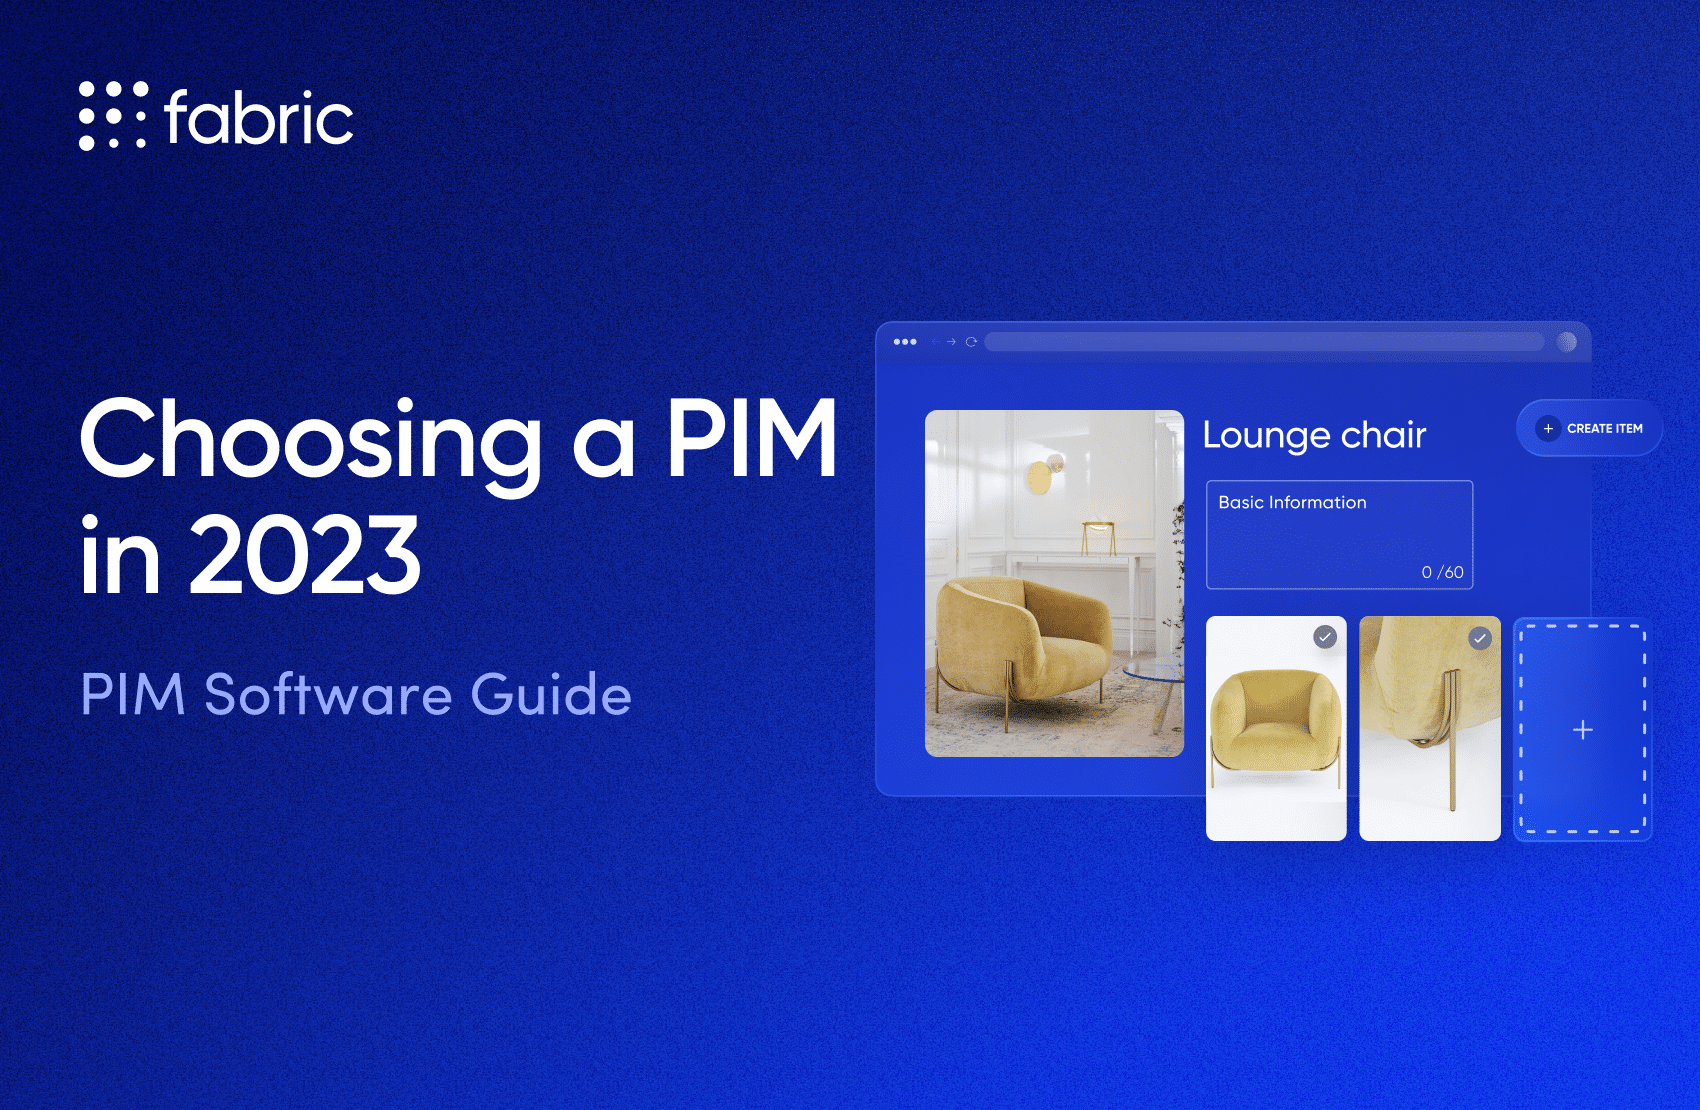 PIM Software Guide: Choosing a PIM in 2023